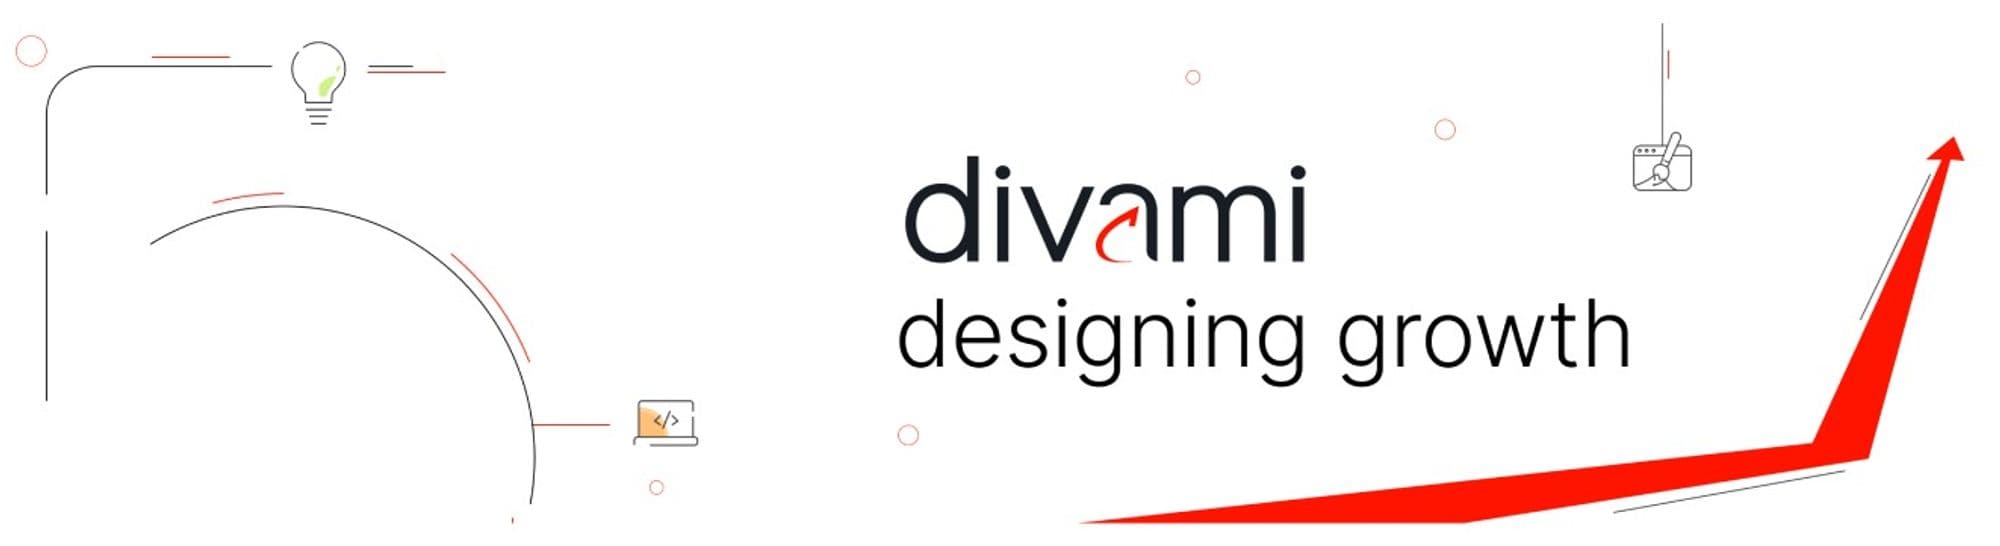 Divami Cover Image